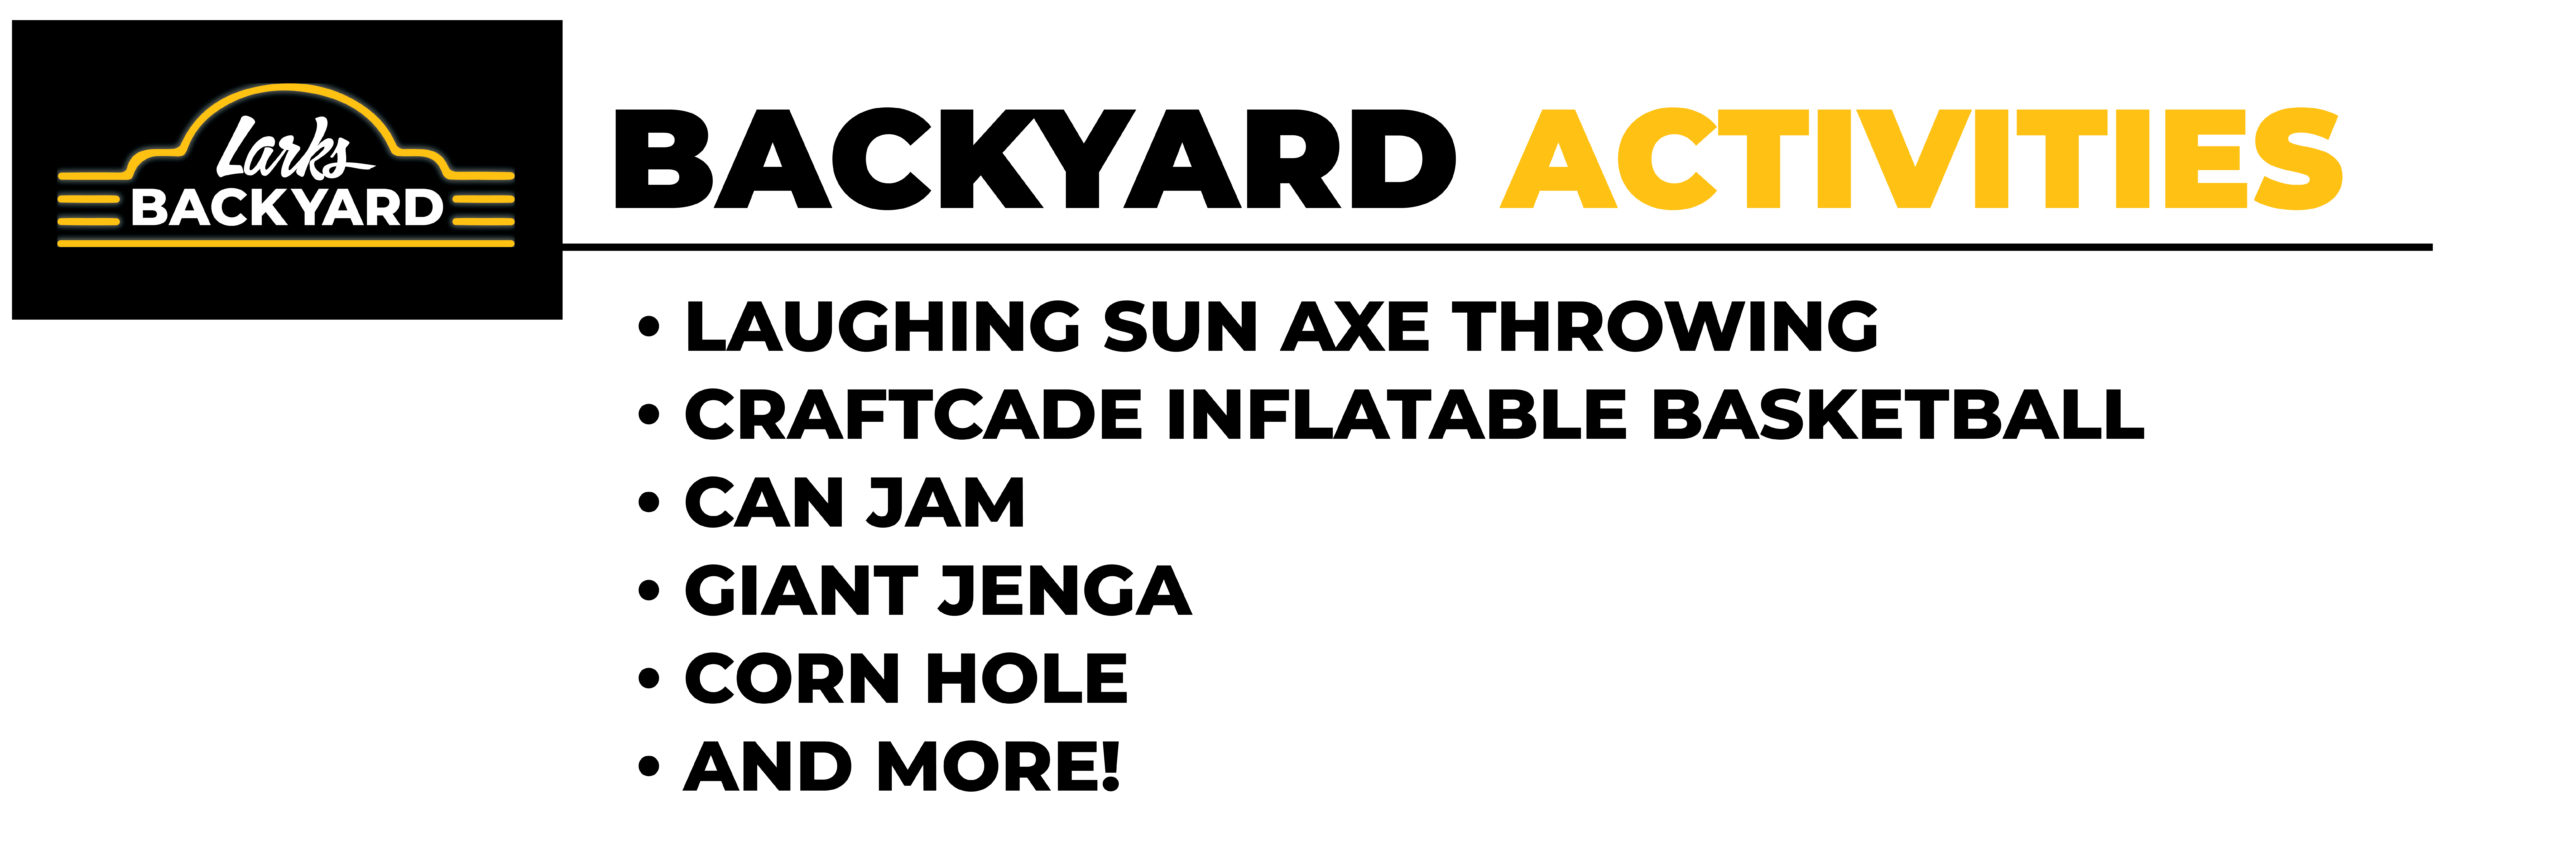 backyard activities